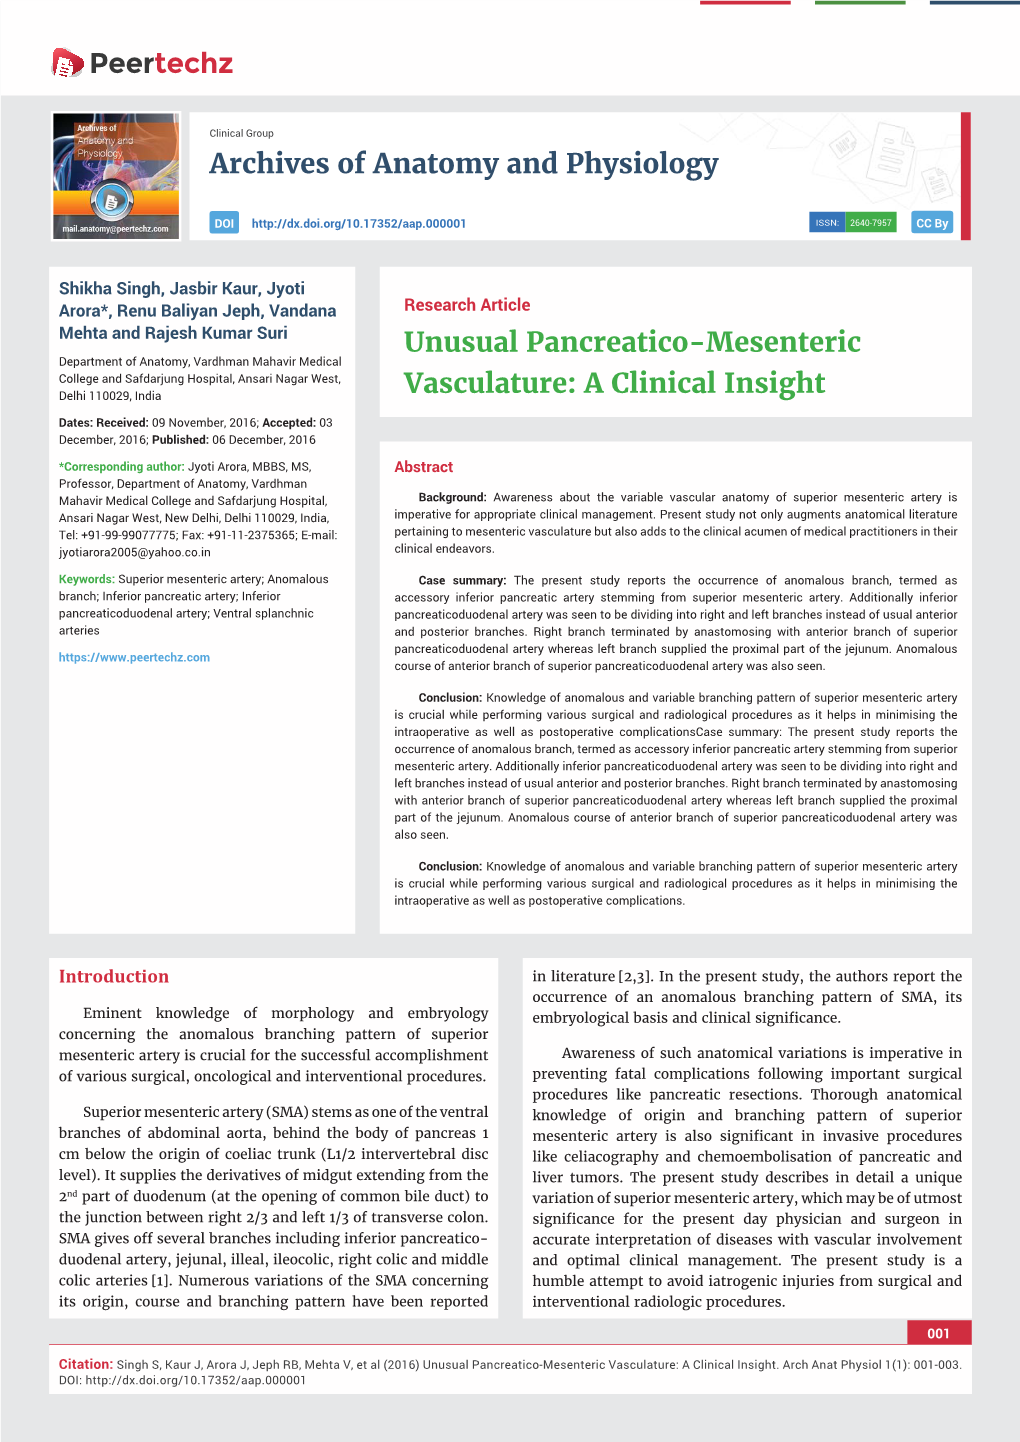 Unusual Pancreatico-Mesenteric Vasculature: a Clinical Insight